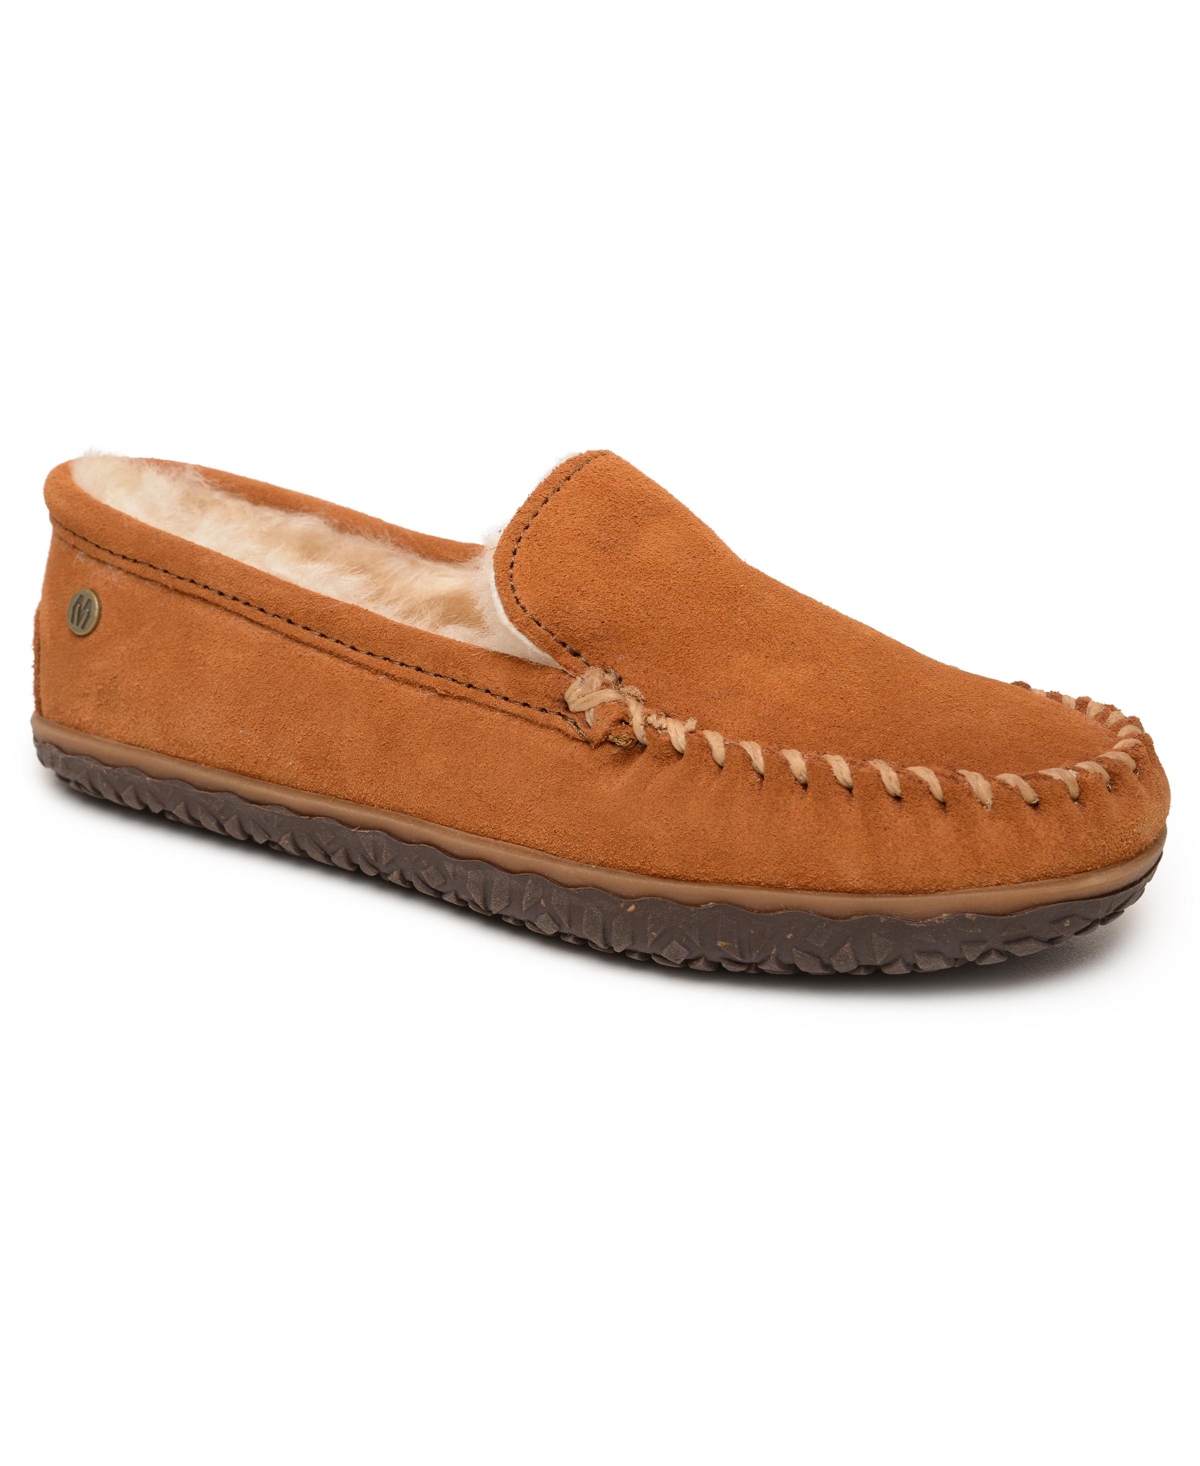 Women's Terese Slippers - Brown